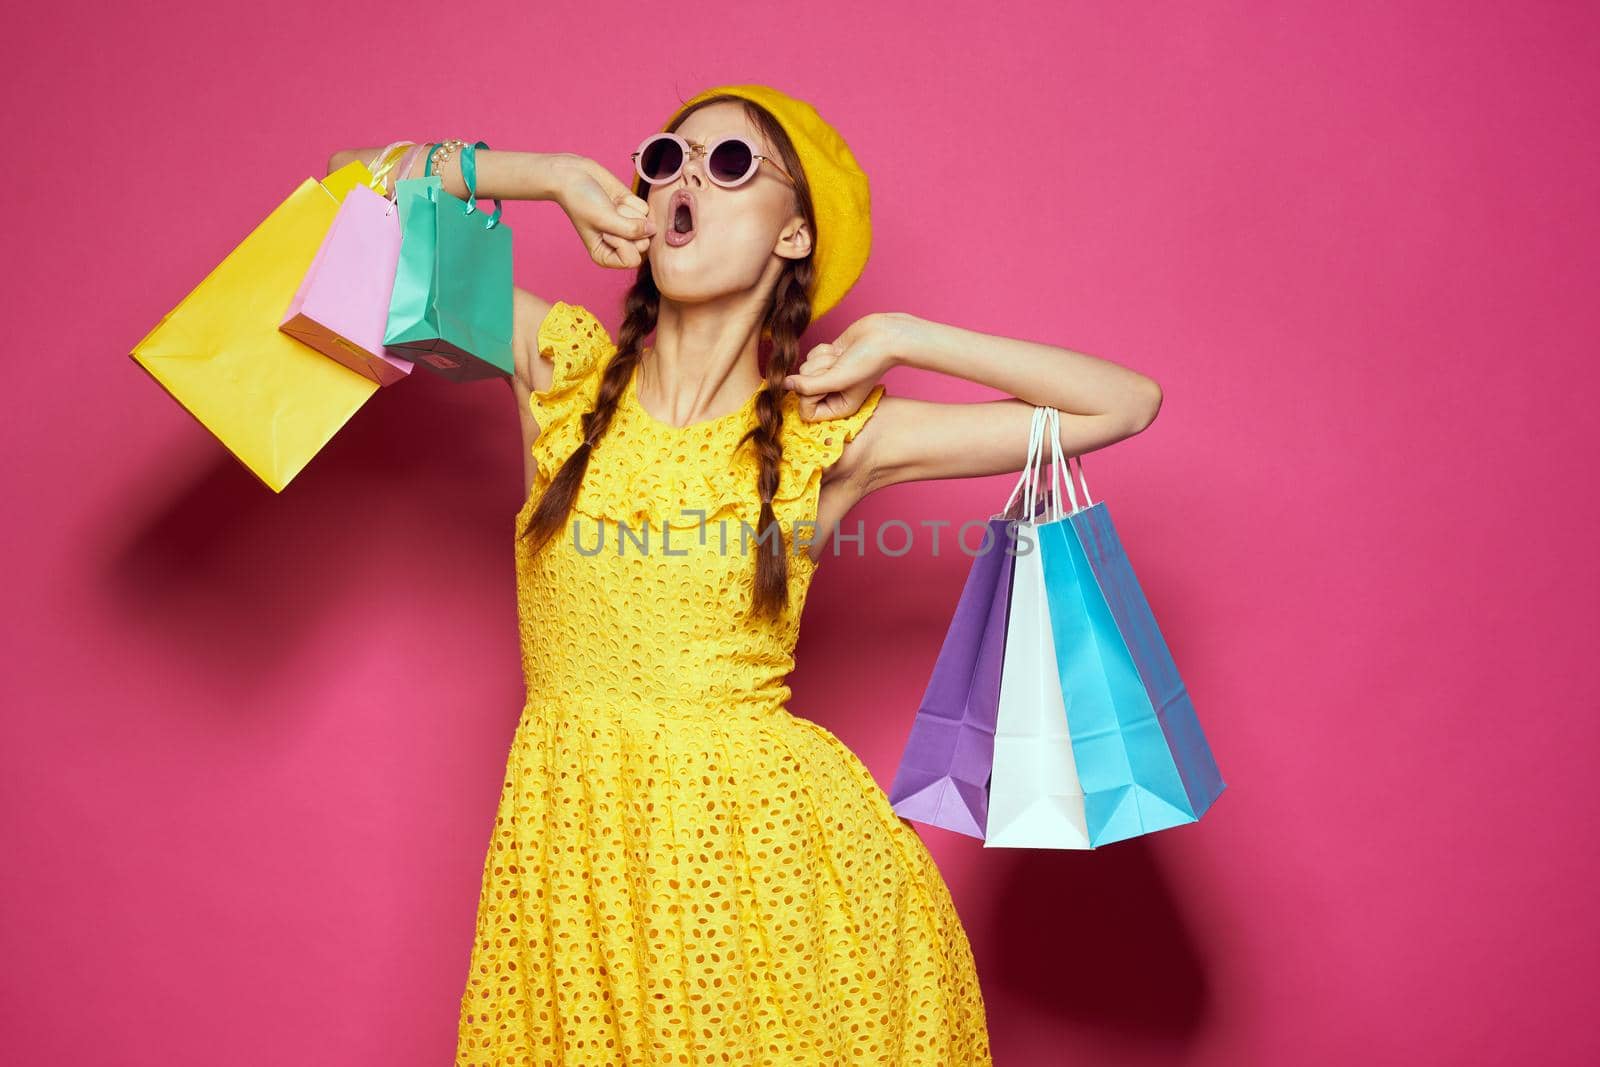 pretty woman yellow dress shopping fun isolated background by Vichizh